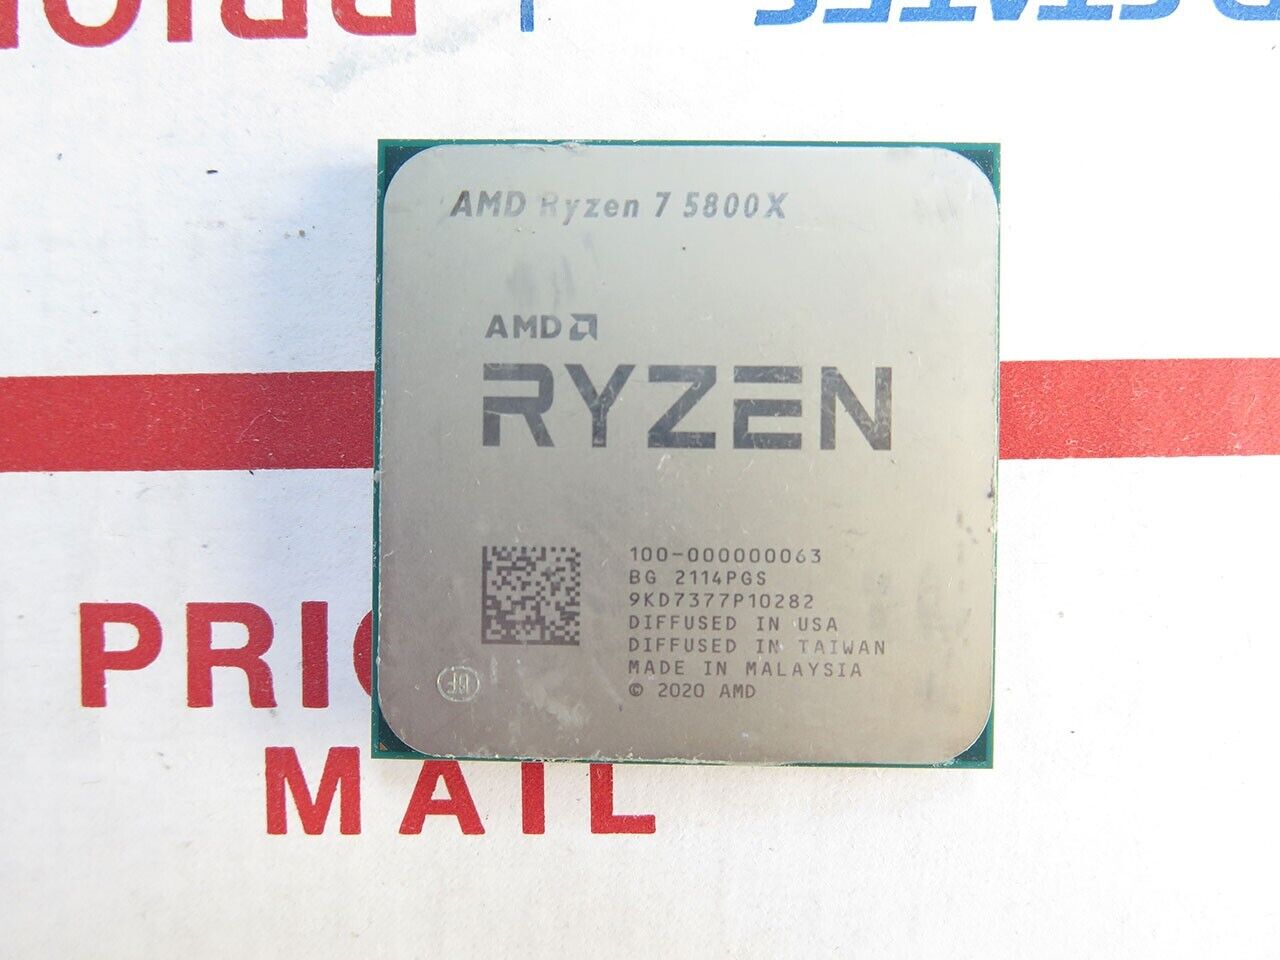 AMD Ryzen 7 5800X 4.70GHz 8 Core 16 Thread AM4 Gaming CPU